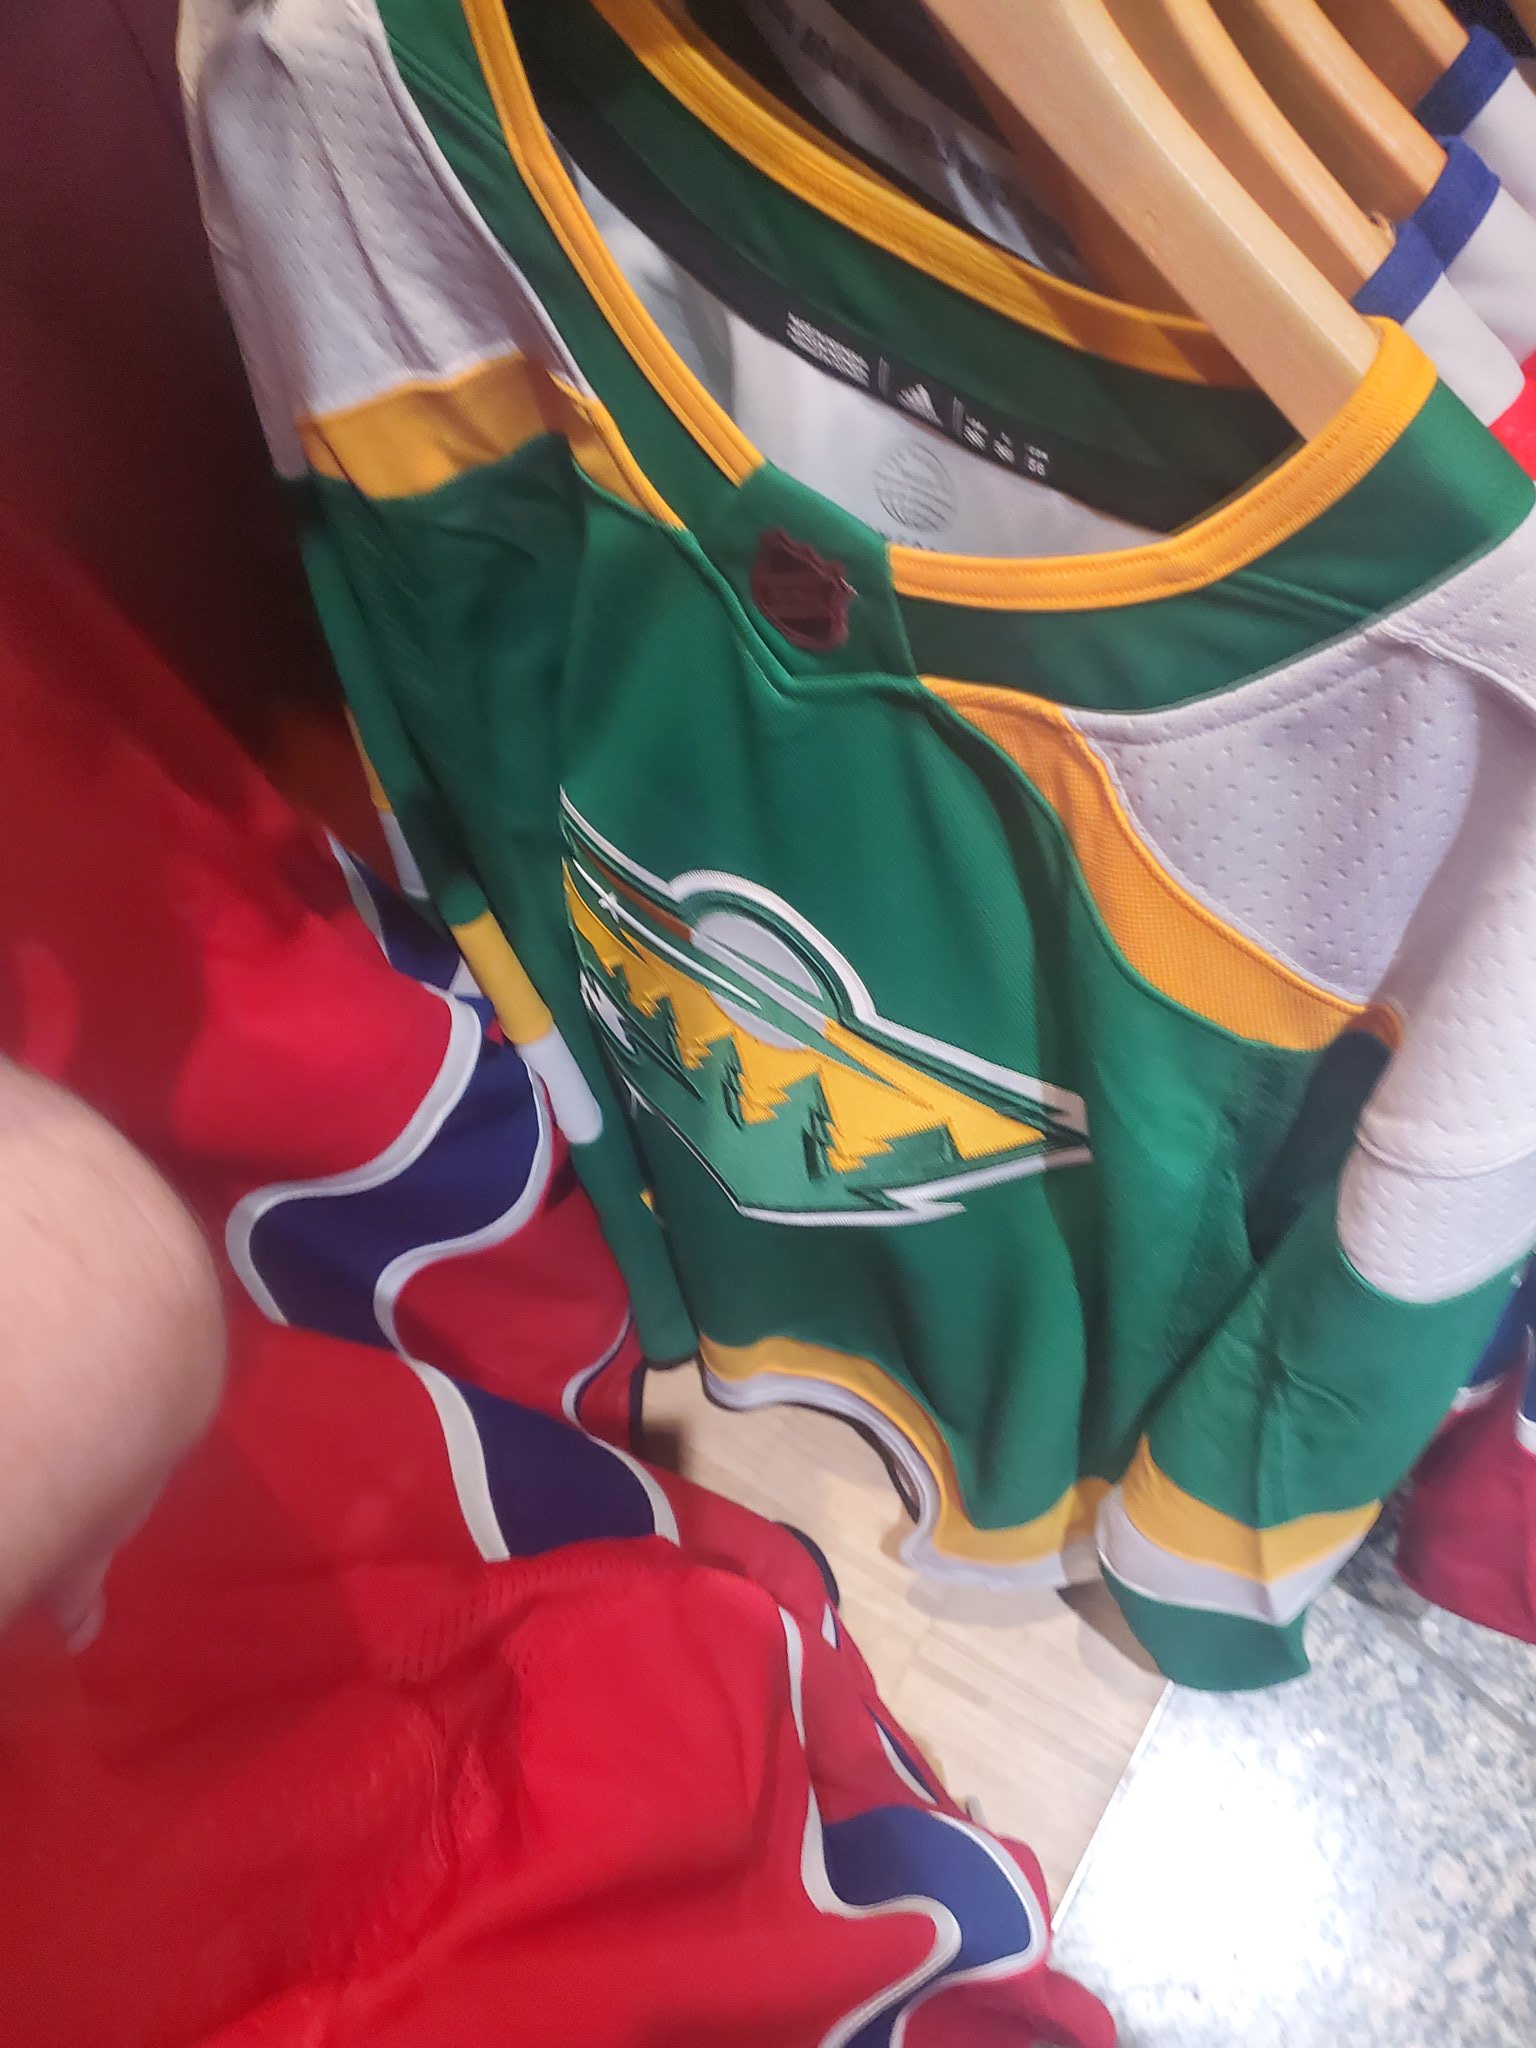 Minnesota Wild Twitter] Wild's Winter Classic jersey revealed : r/hockey